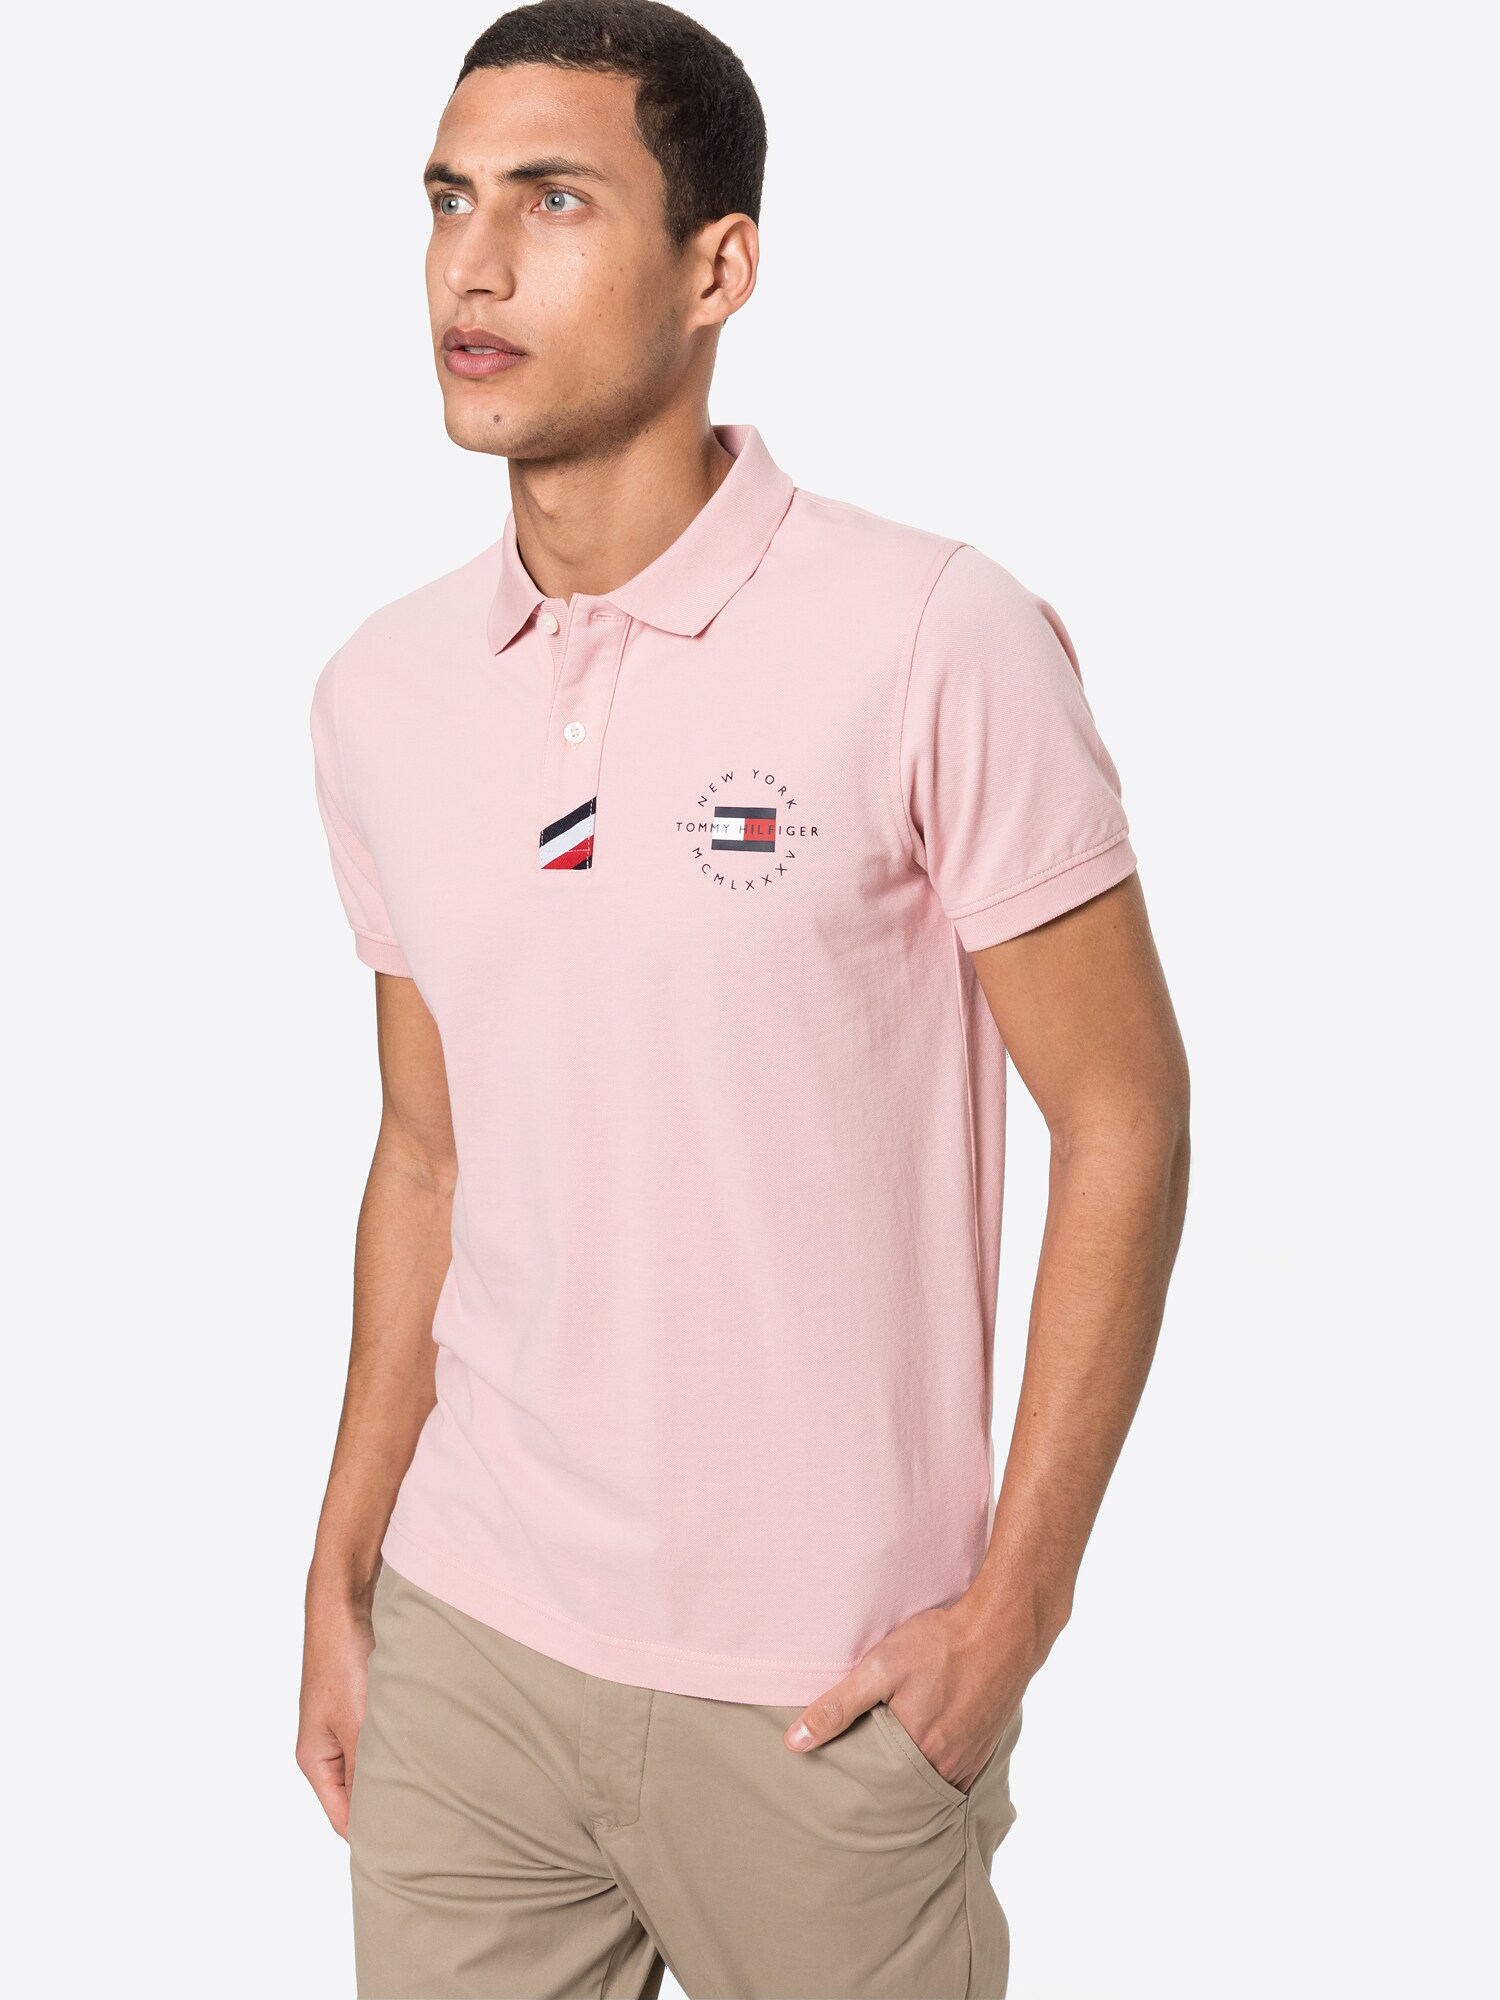 TOMMY HILFIGER Shirt  pink / marine / red / white